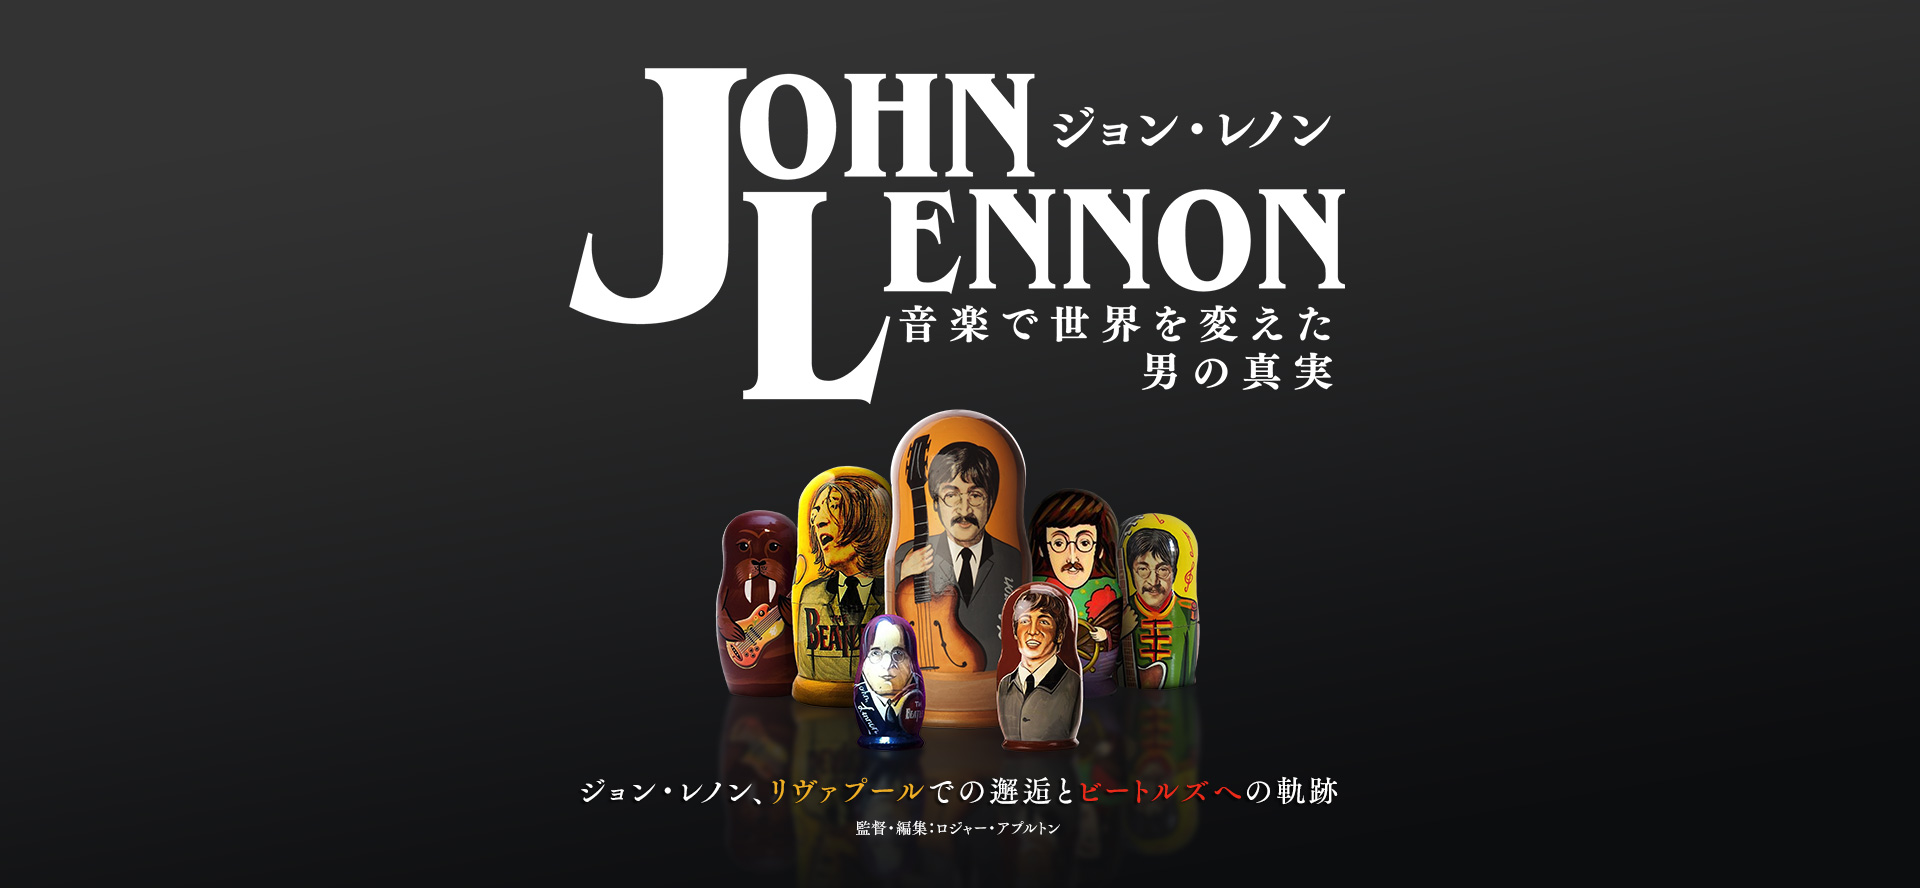 JOHN LENNON 音楽で世界を変えた男の真実